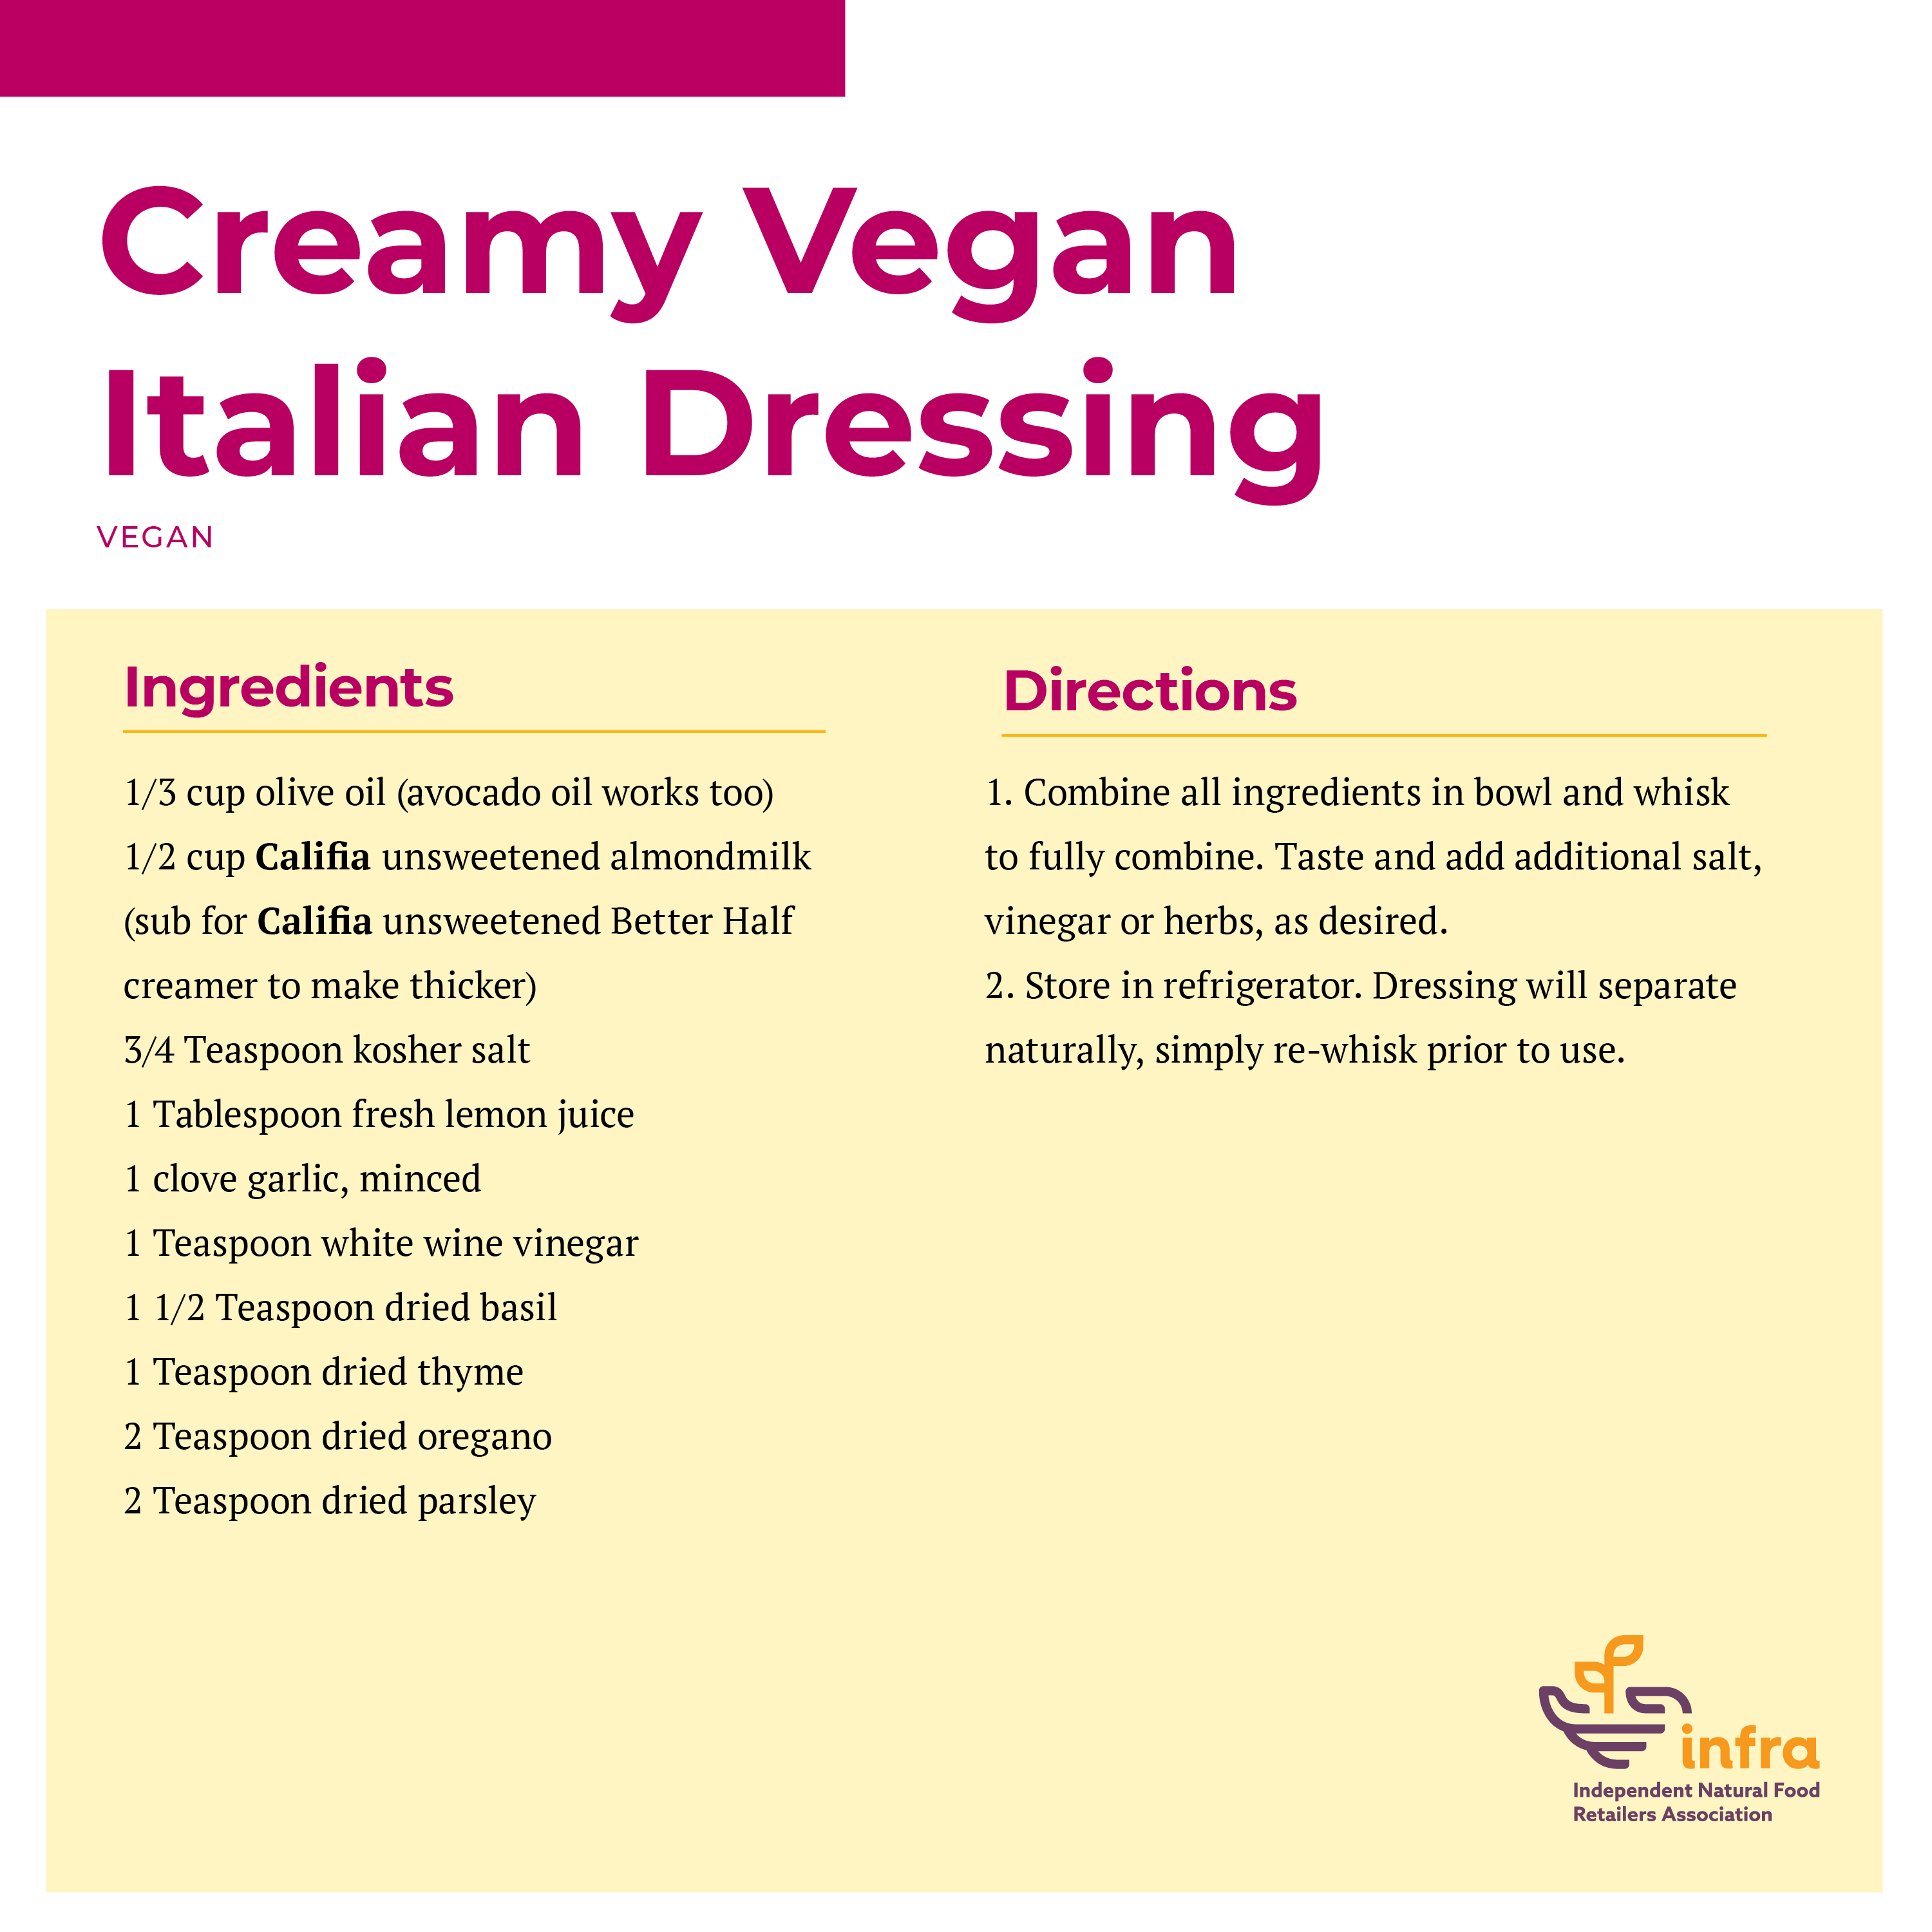 Creamy Vegan Italian Dressing